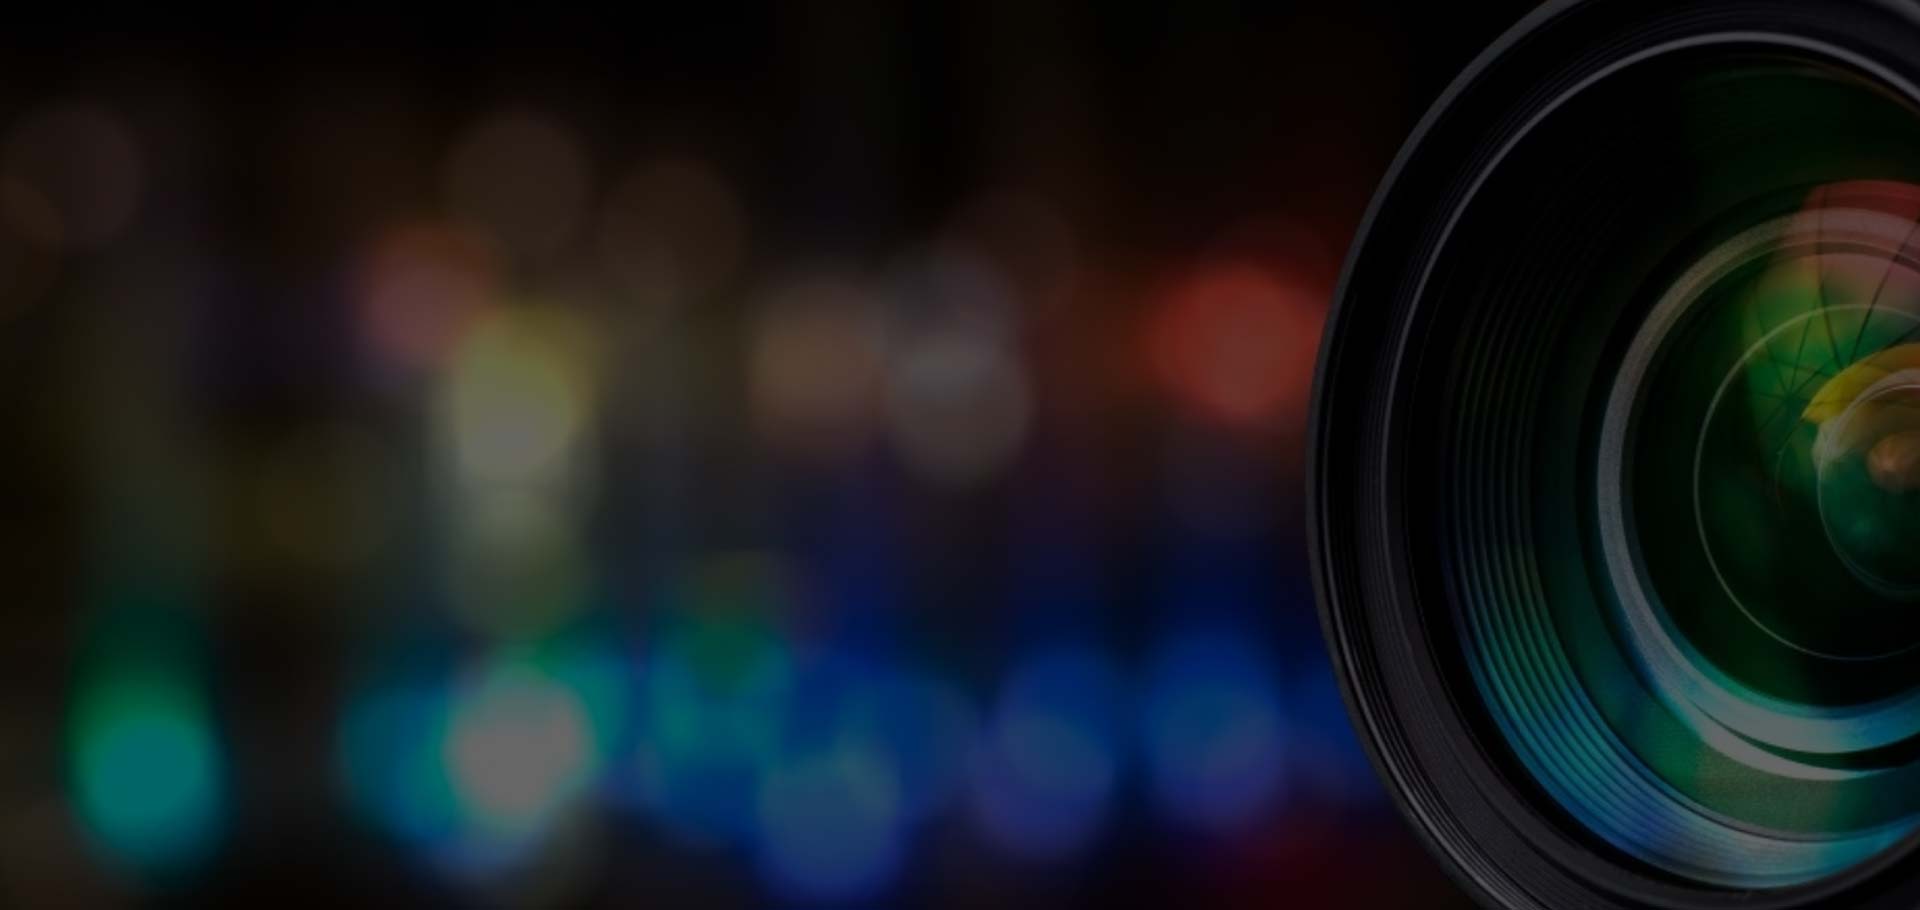 Why Choose Tesoo Automotive Camera Lens？